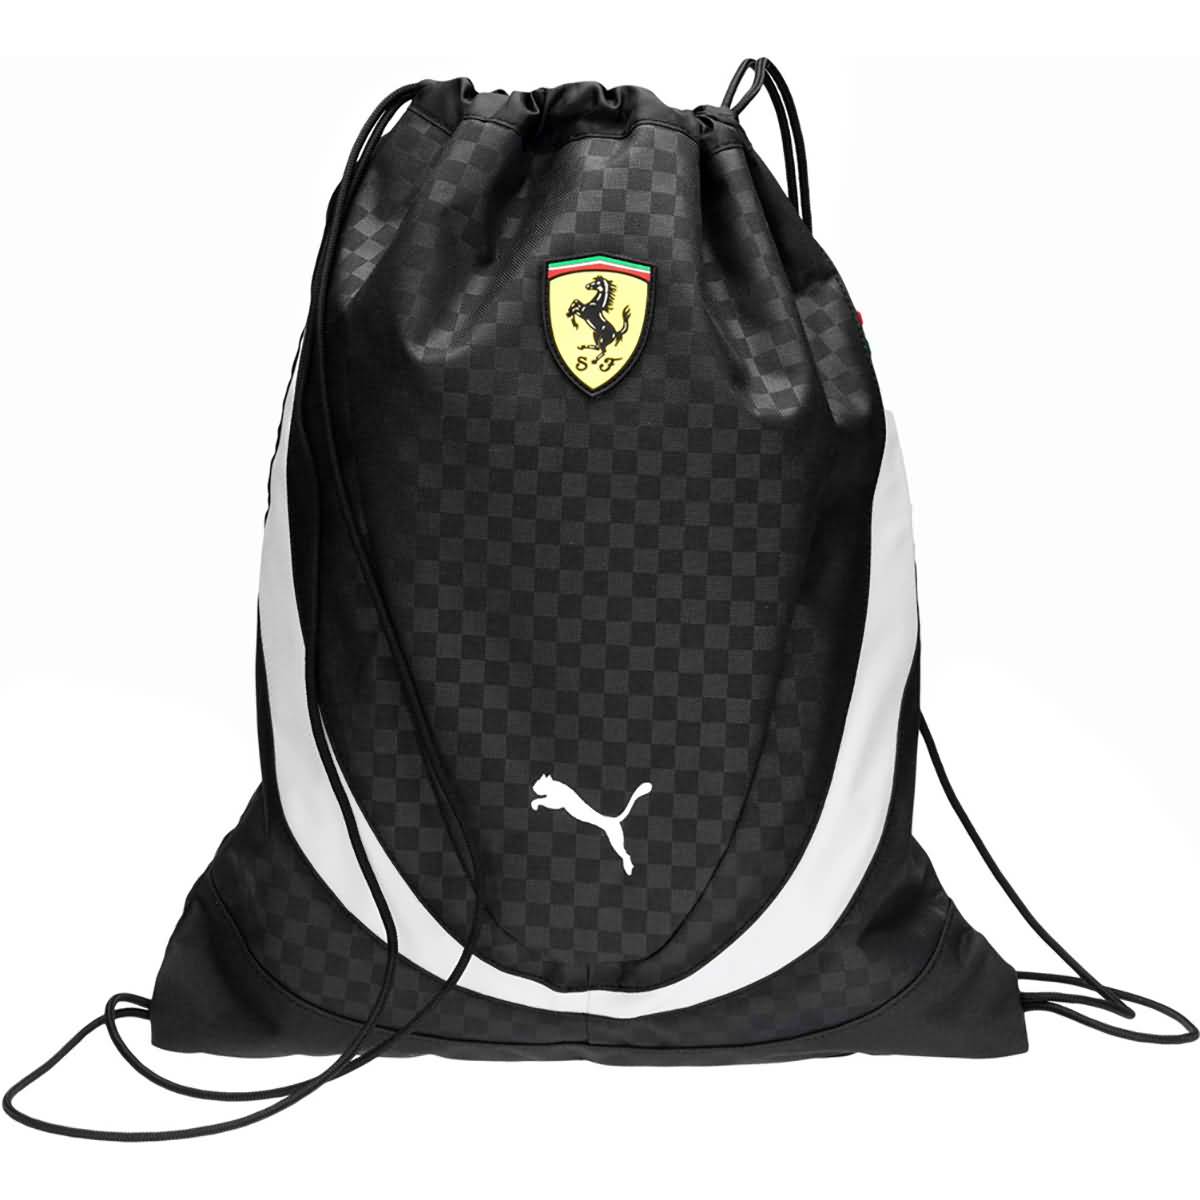 Ferrari Men's Bags and Luggage | Ferrari Store